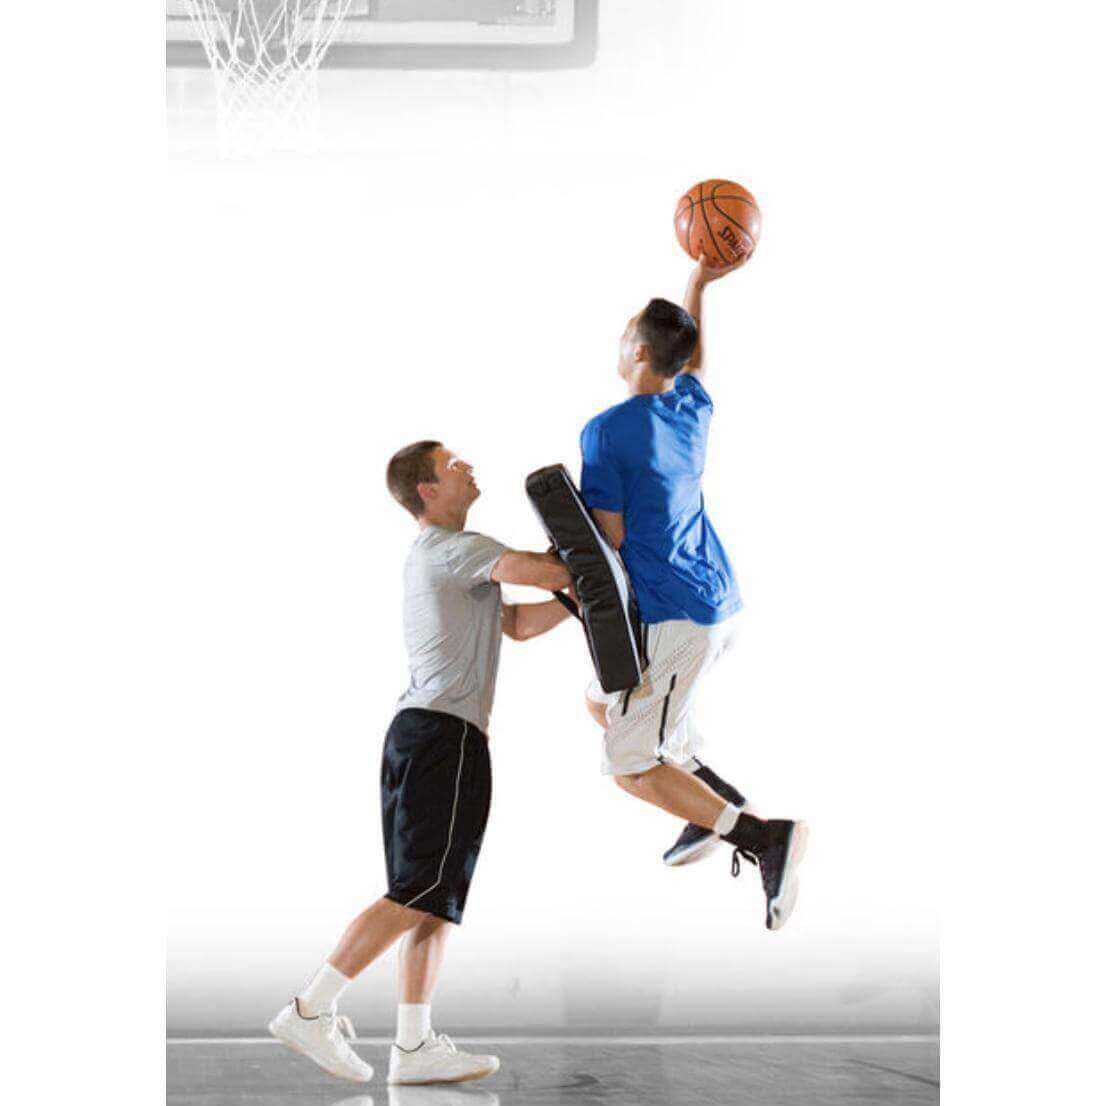 Spalding Basketball Skill-Building Blocking Pad